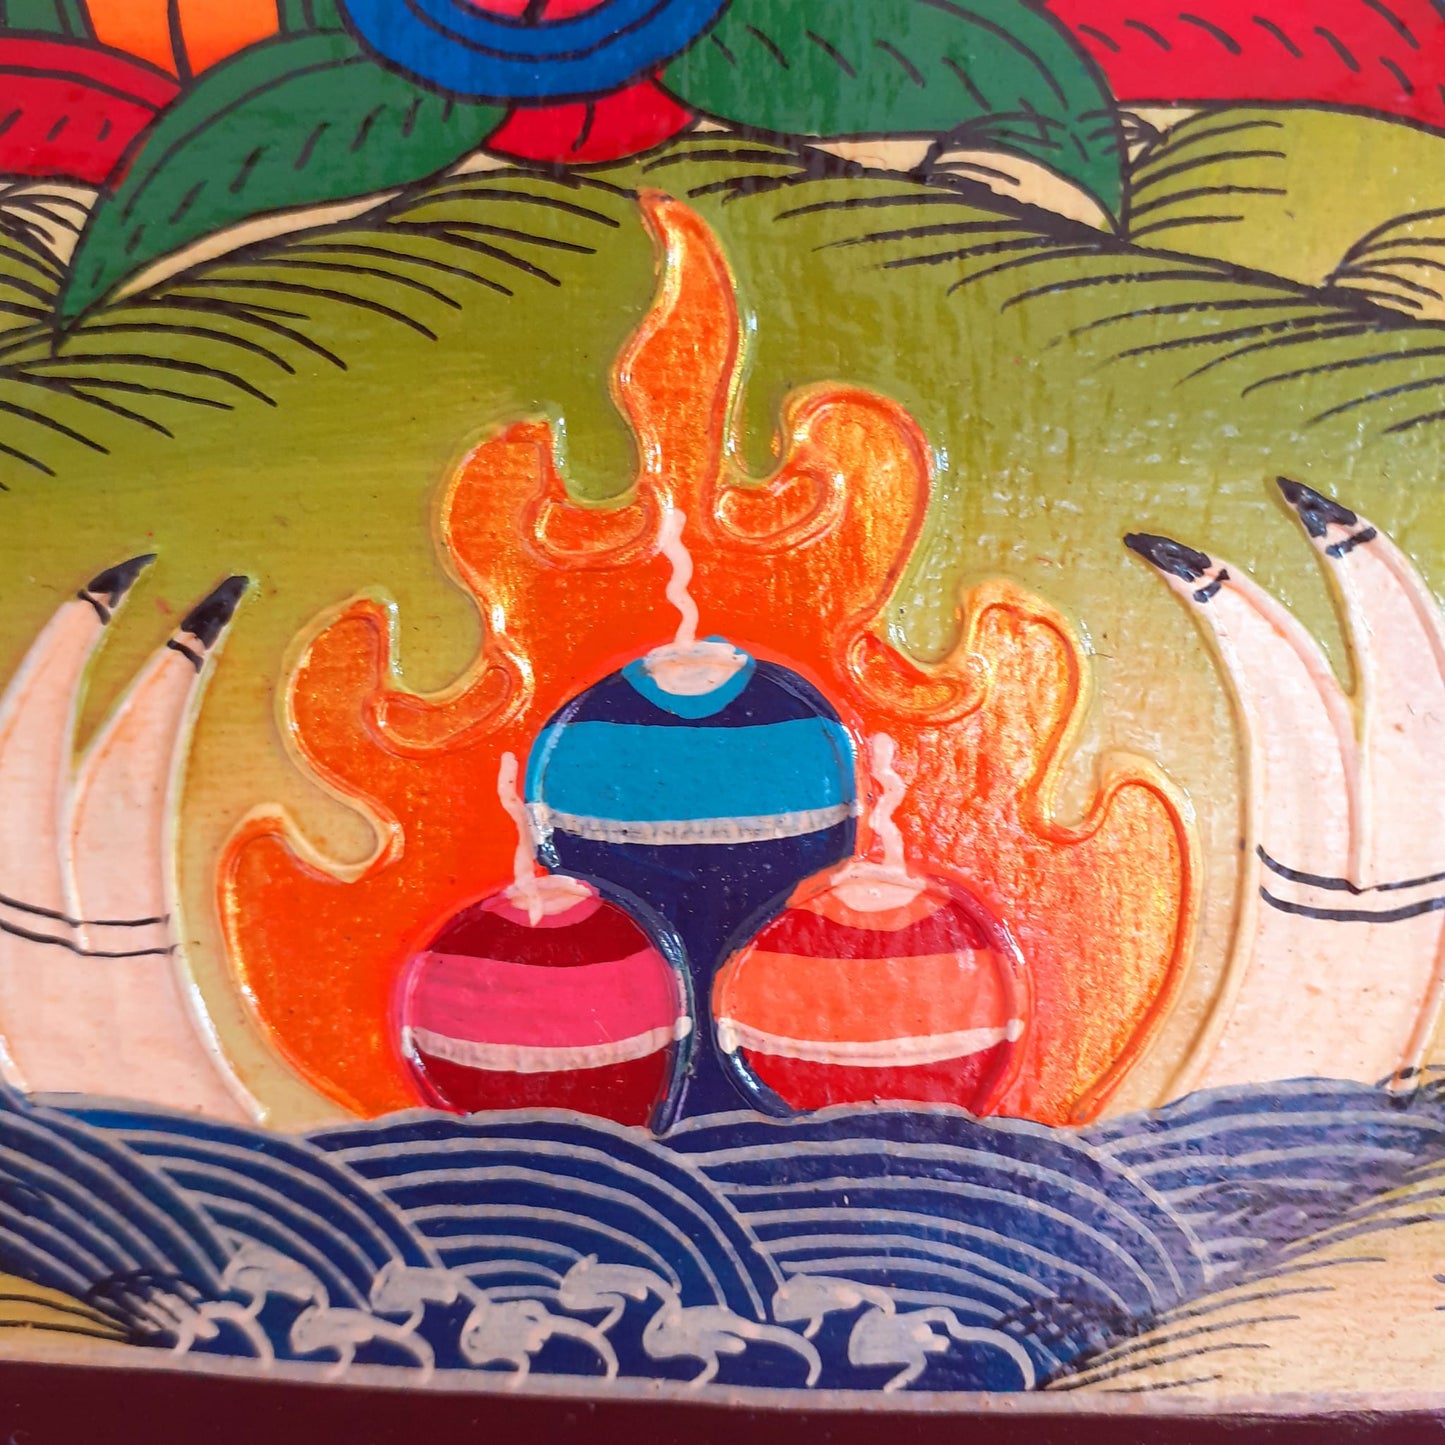 Tibetan Medicine Buddha Wooden Thangka picture 41cm x 30cm x 2.5cm